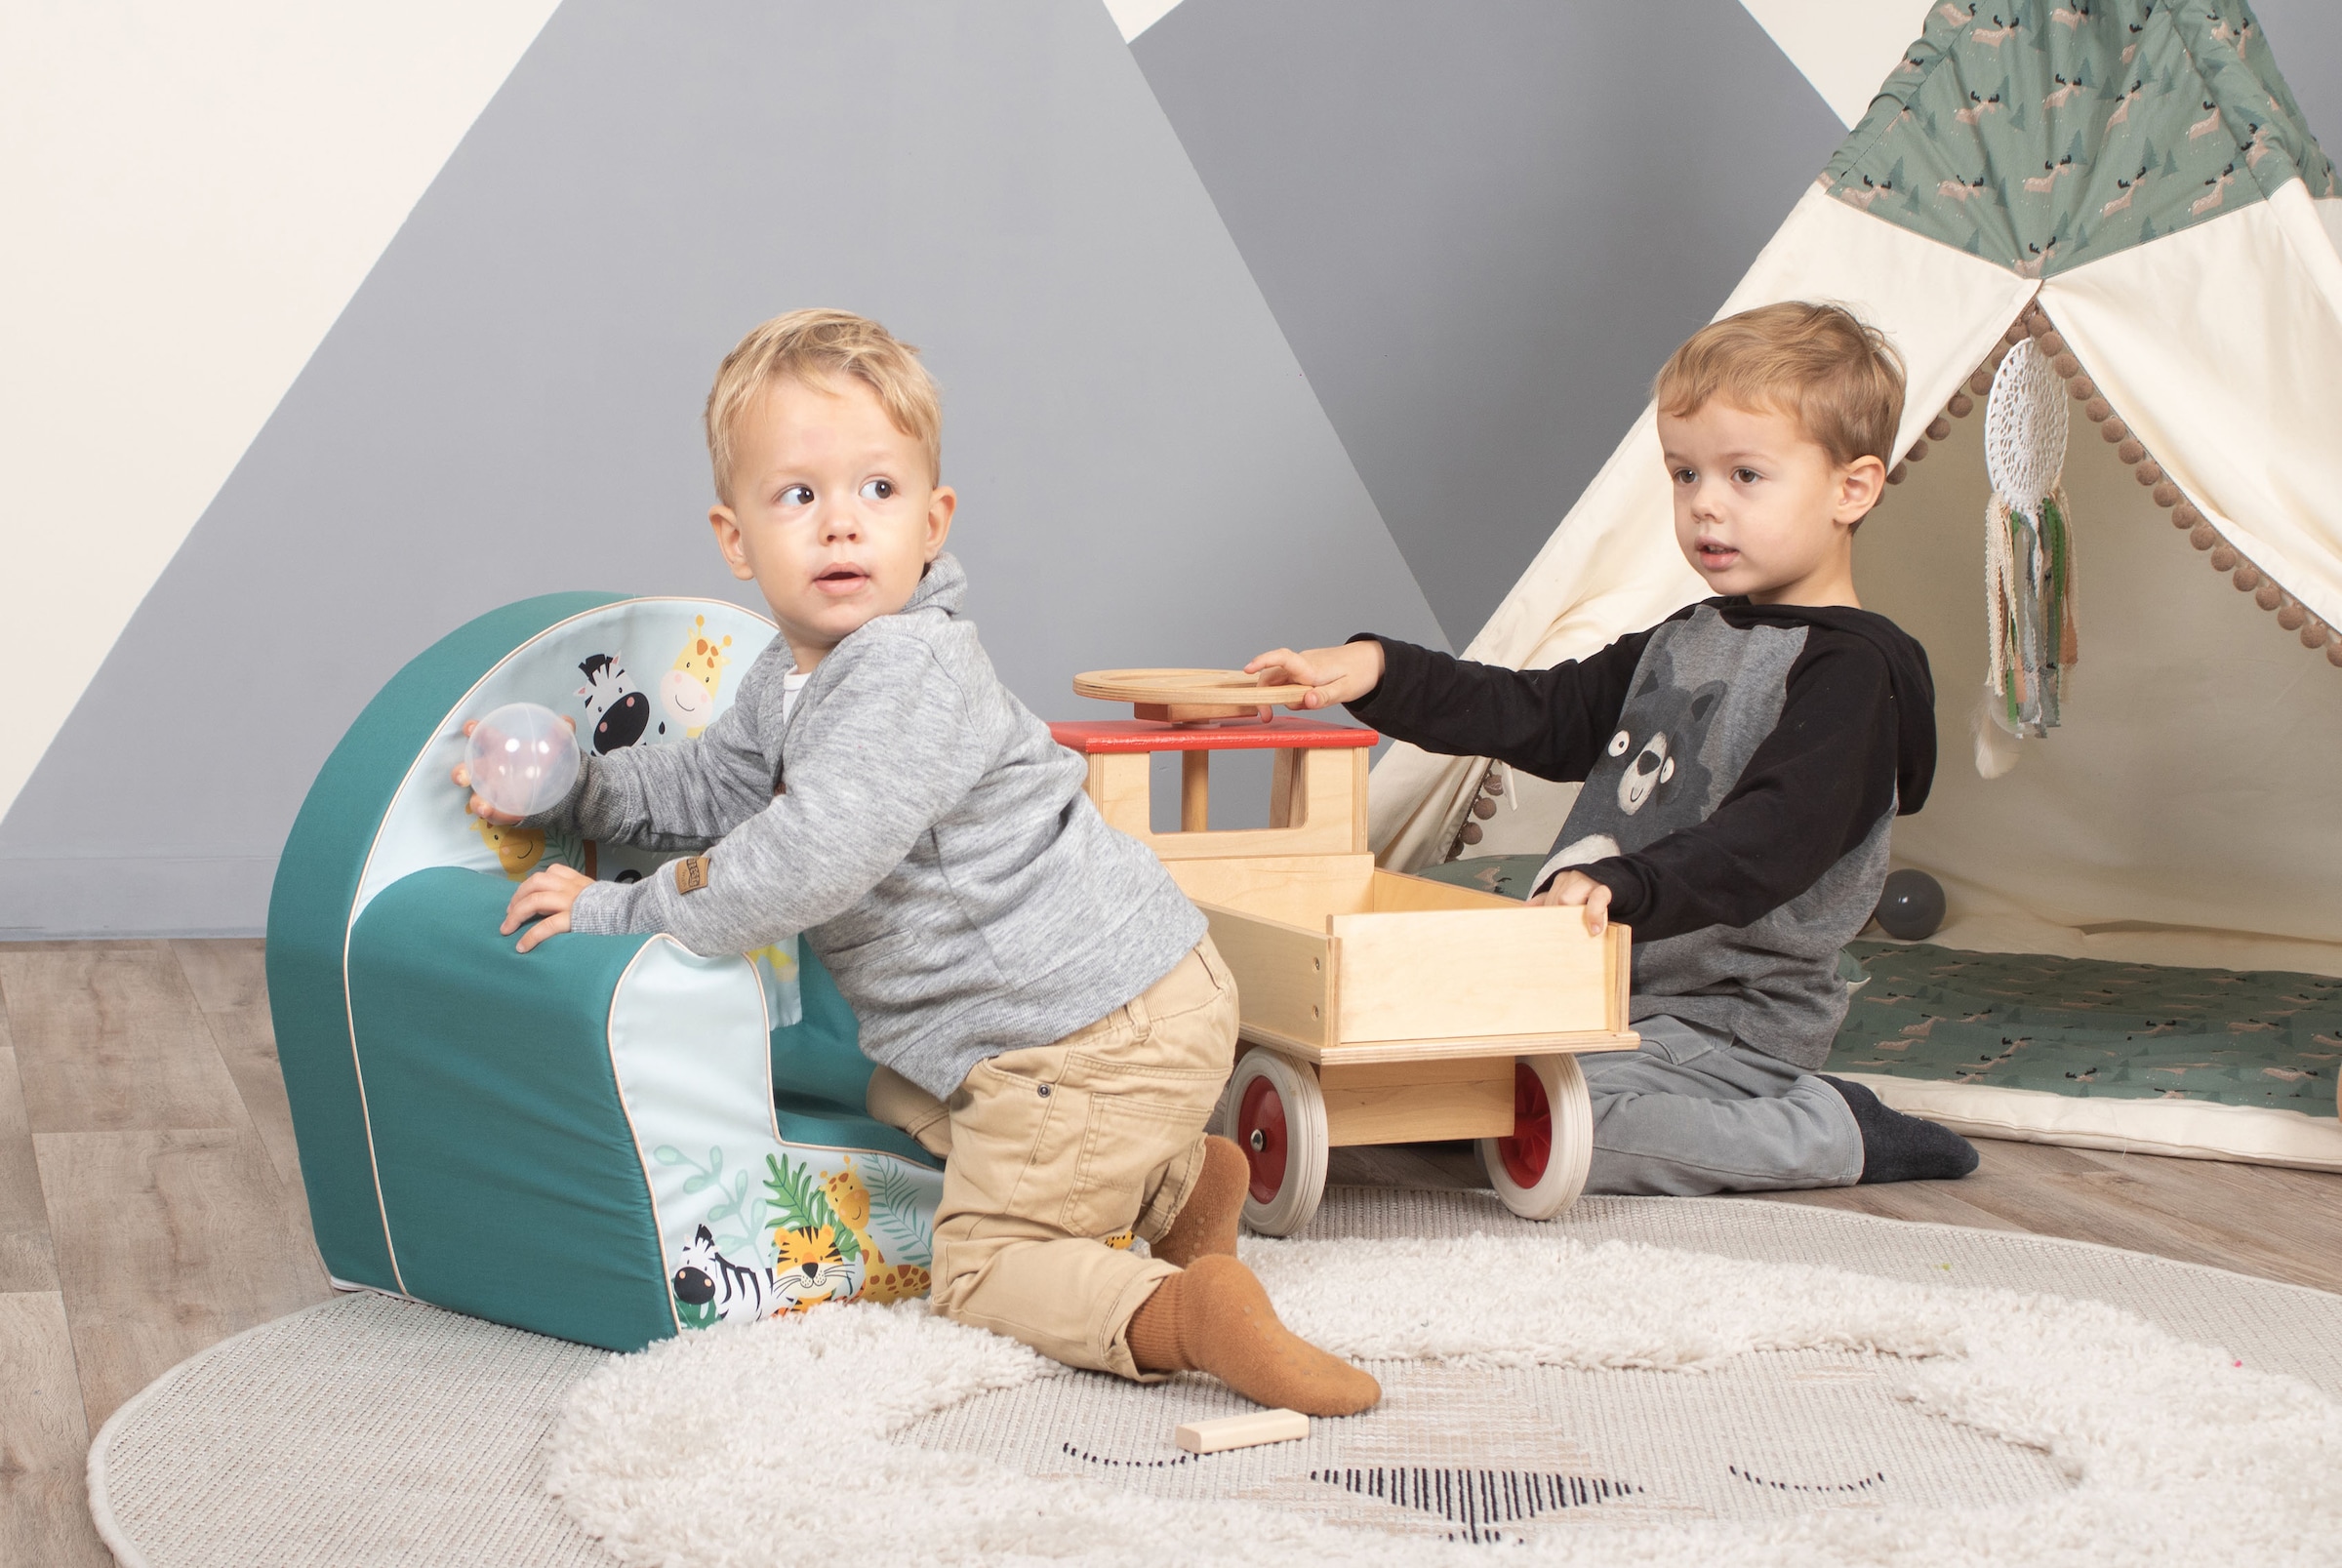 Knorrtoys® Sessel »Safari«, für Kinder; Made in Europe